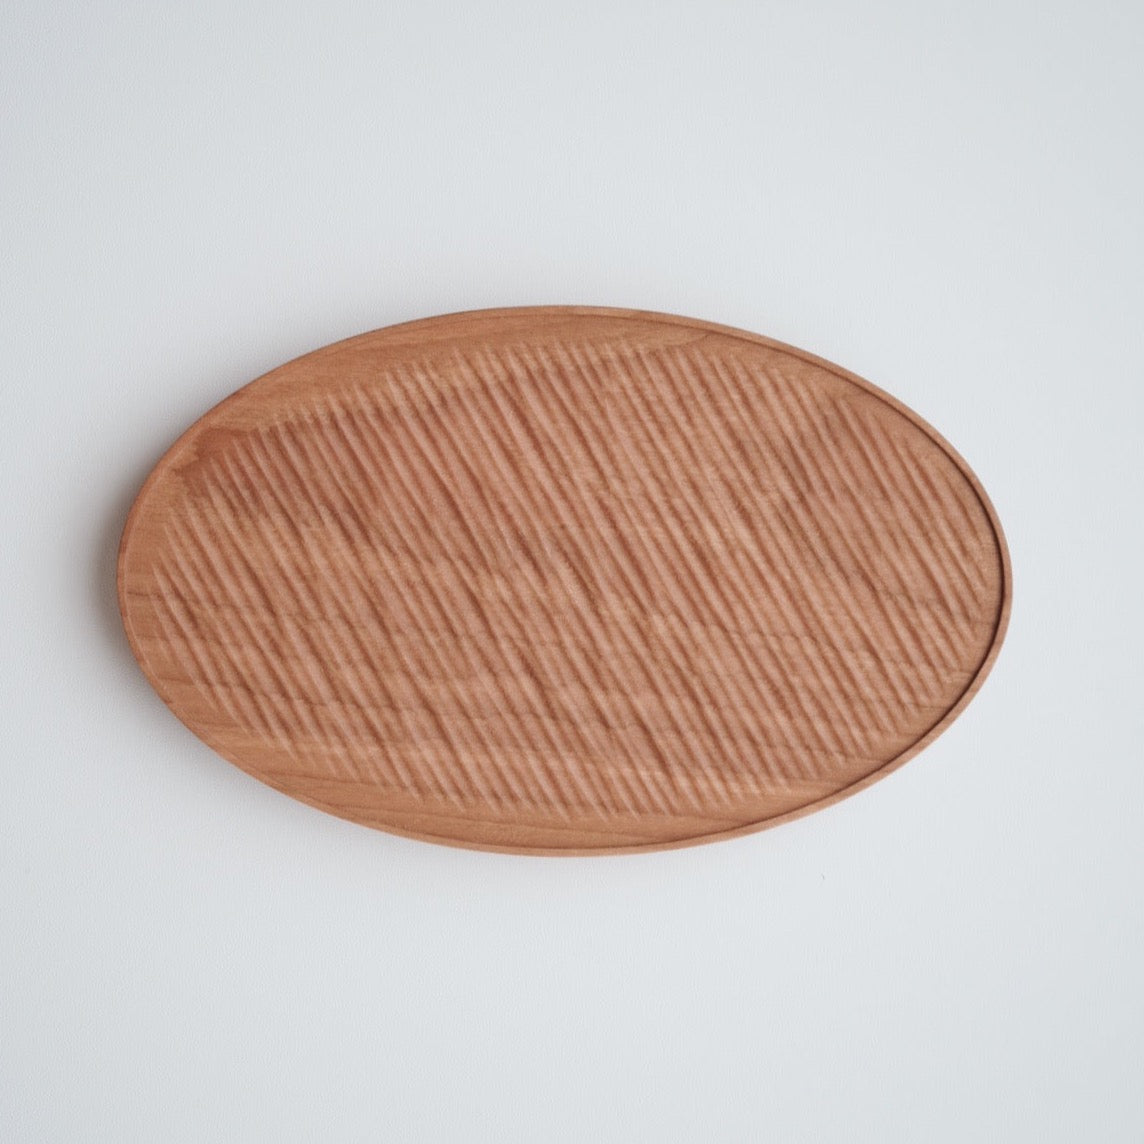 Cherry Wood Dessert Plate - Oval